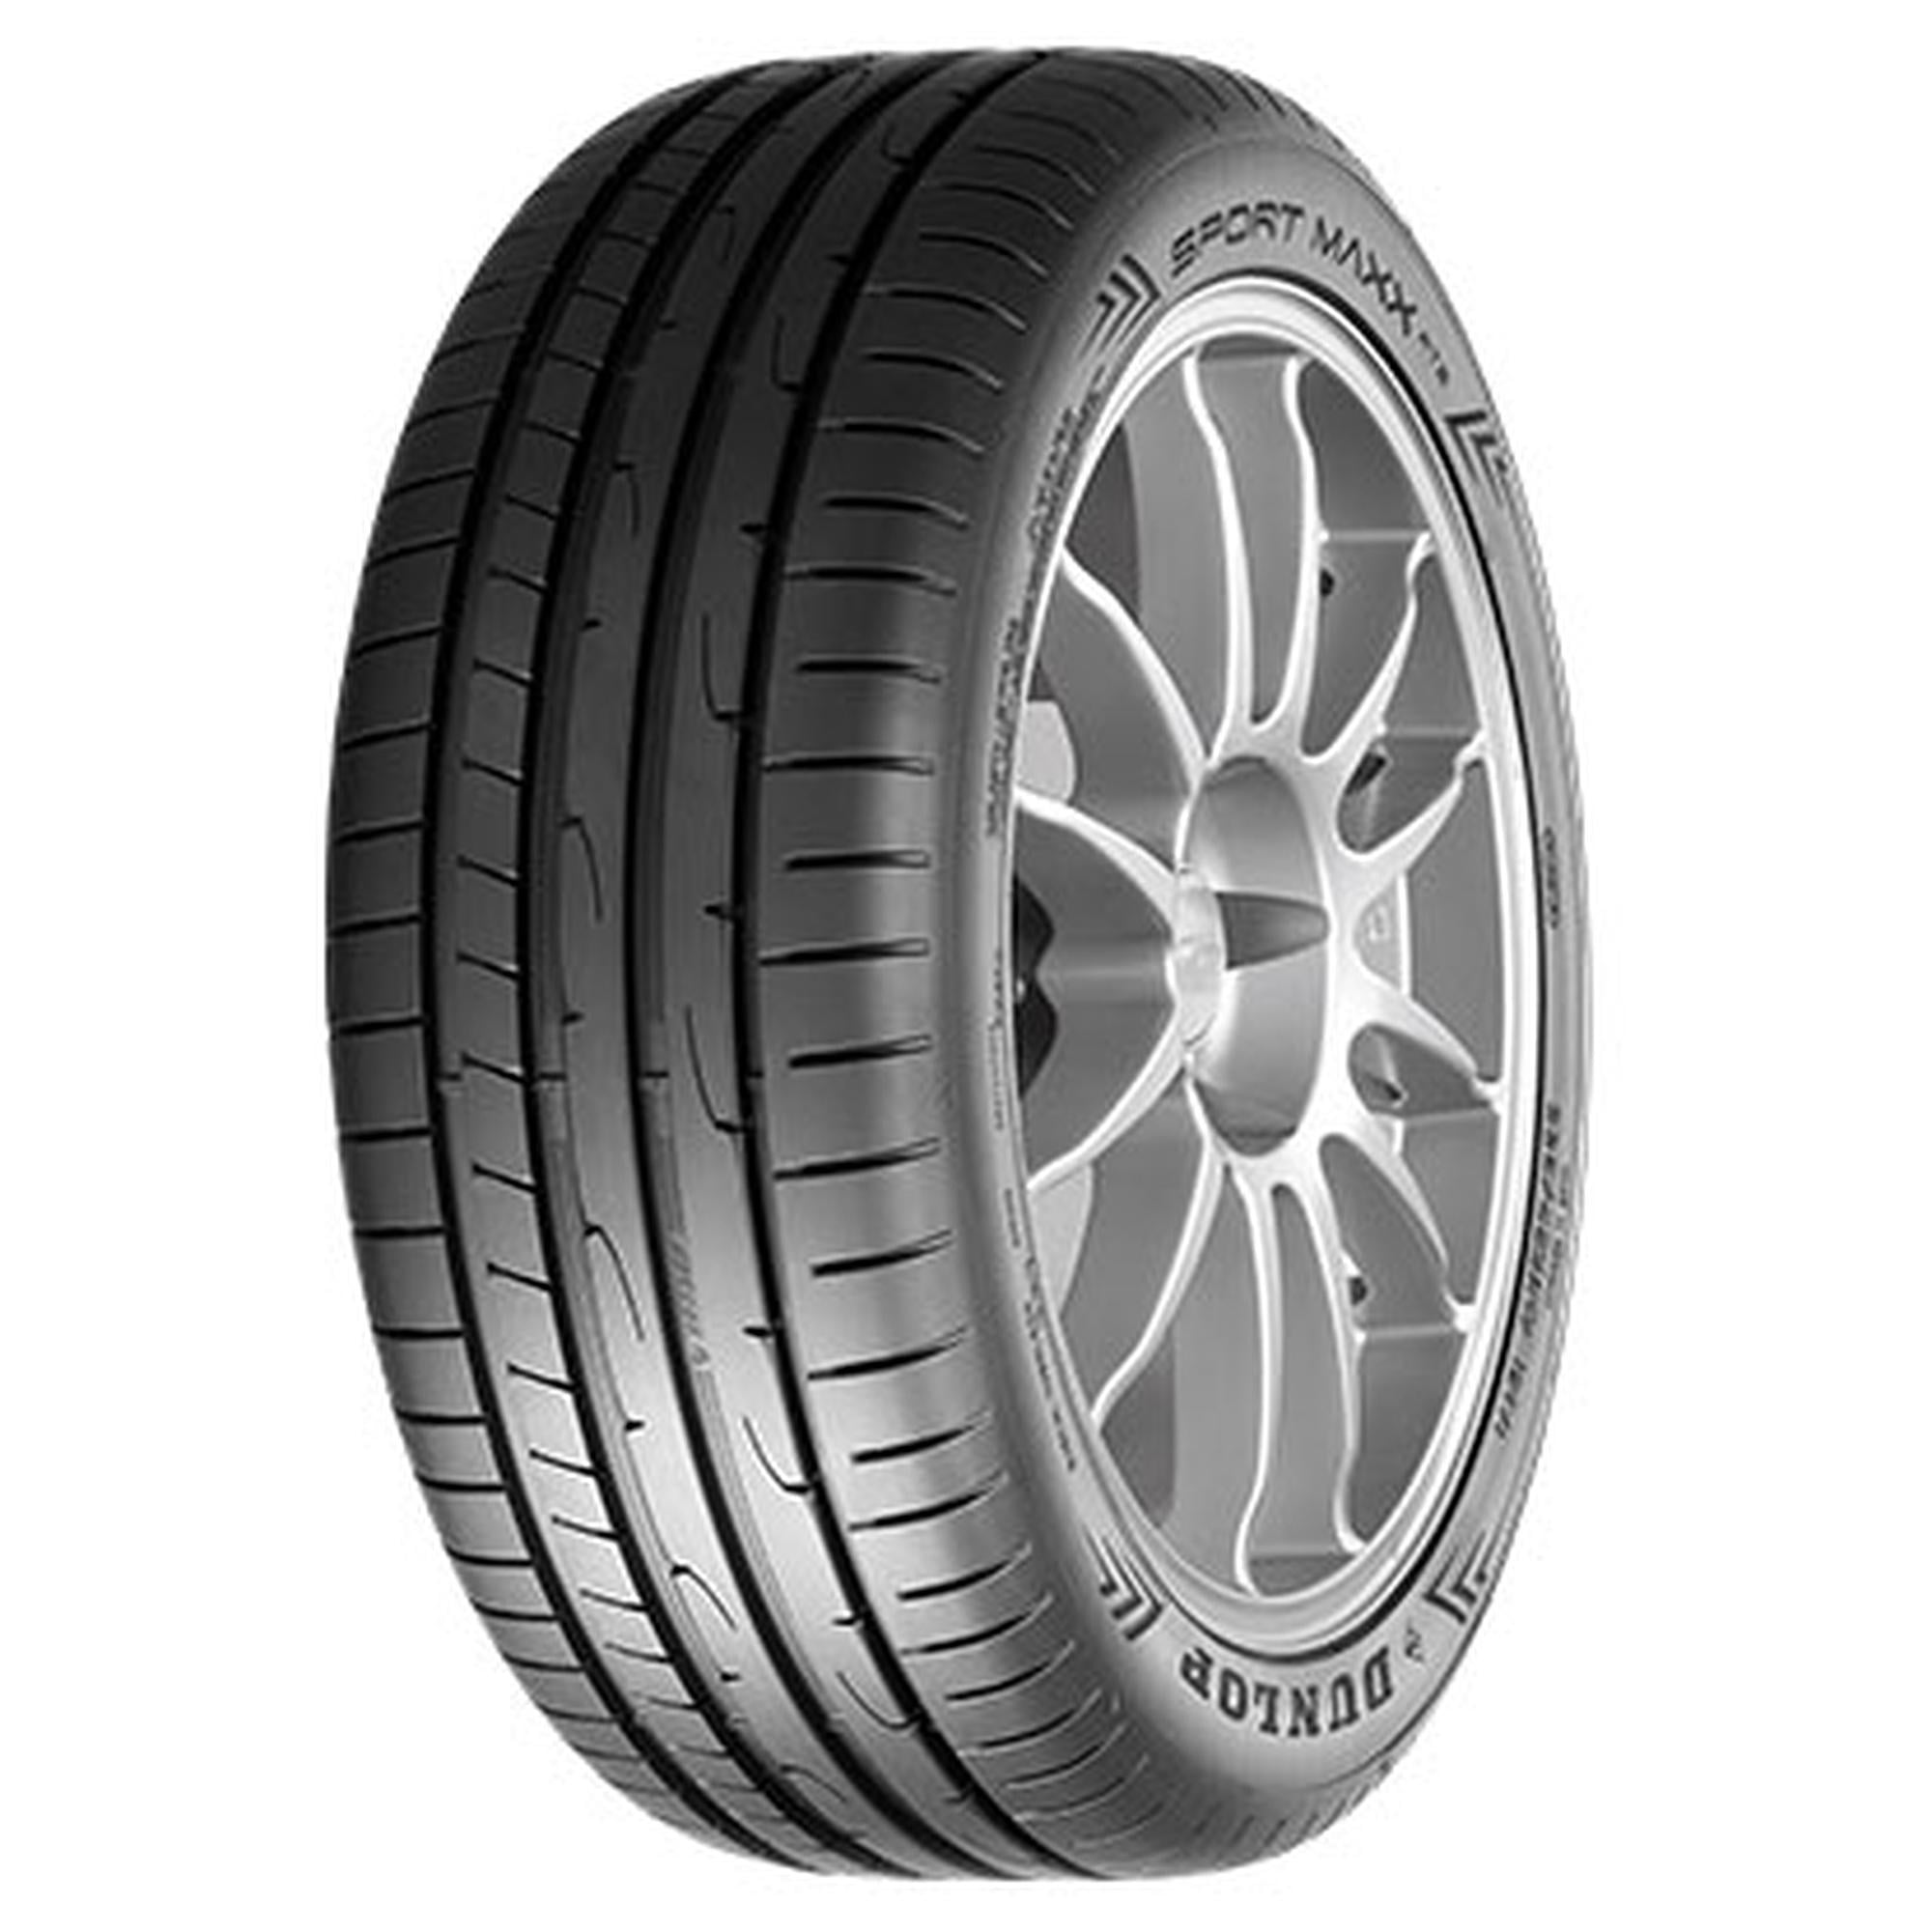 Dunlop Sport Maxx 2011 Fits: Base, Performance 328i V BMW Tire 2016-19 Cadillac ATS 255/35ZR18 Rt2 94Y